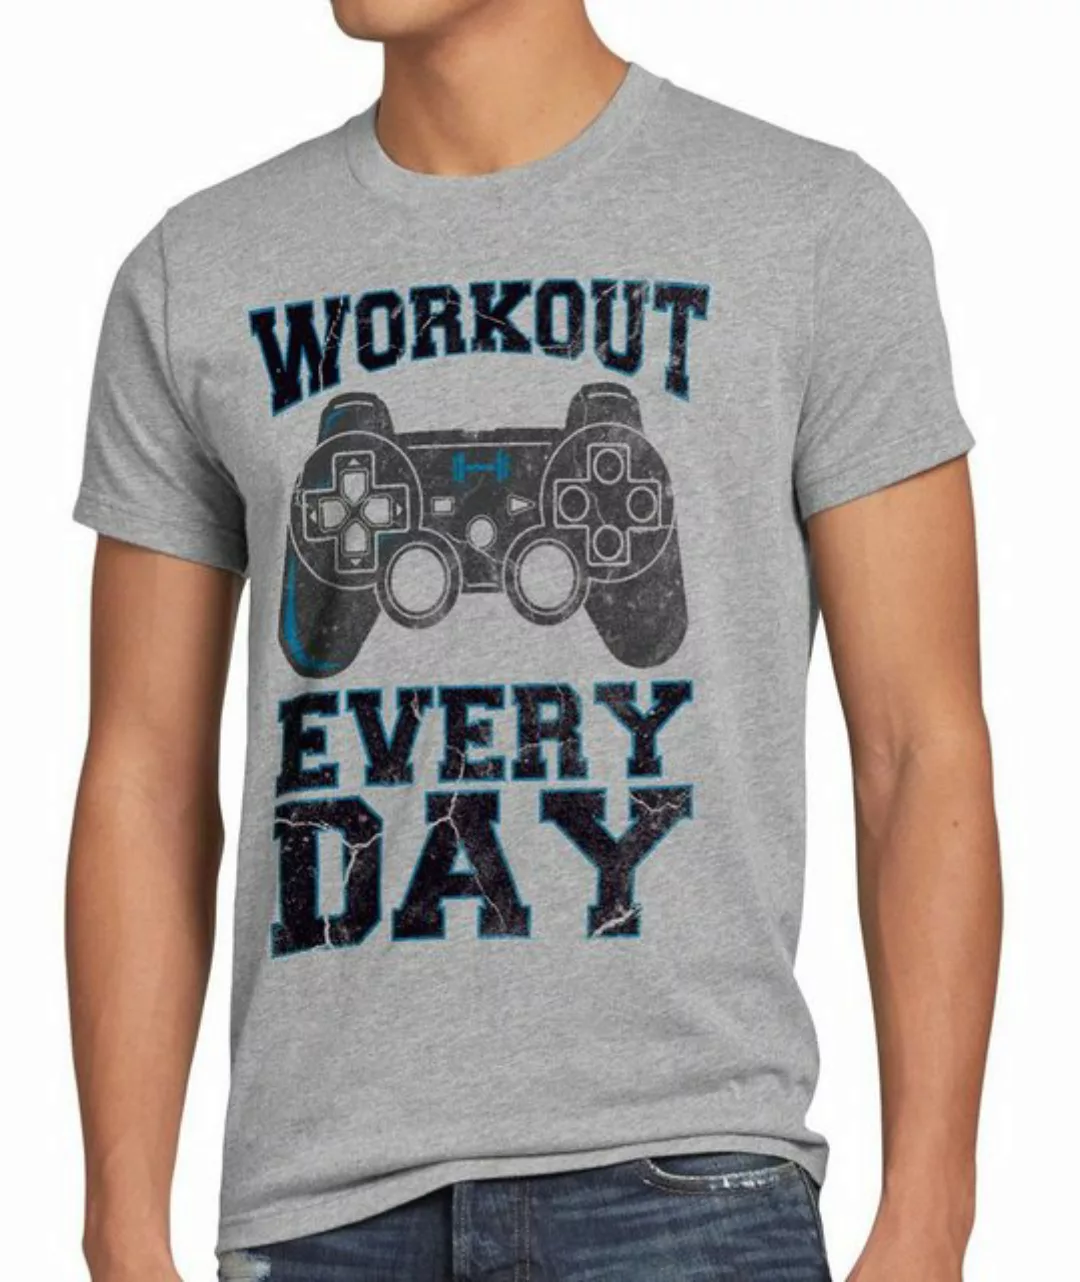 style3 Print-Shirt Herren T-Shirt Workout Gamer play sport station kontroll günstig online kaufen